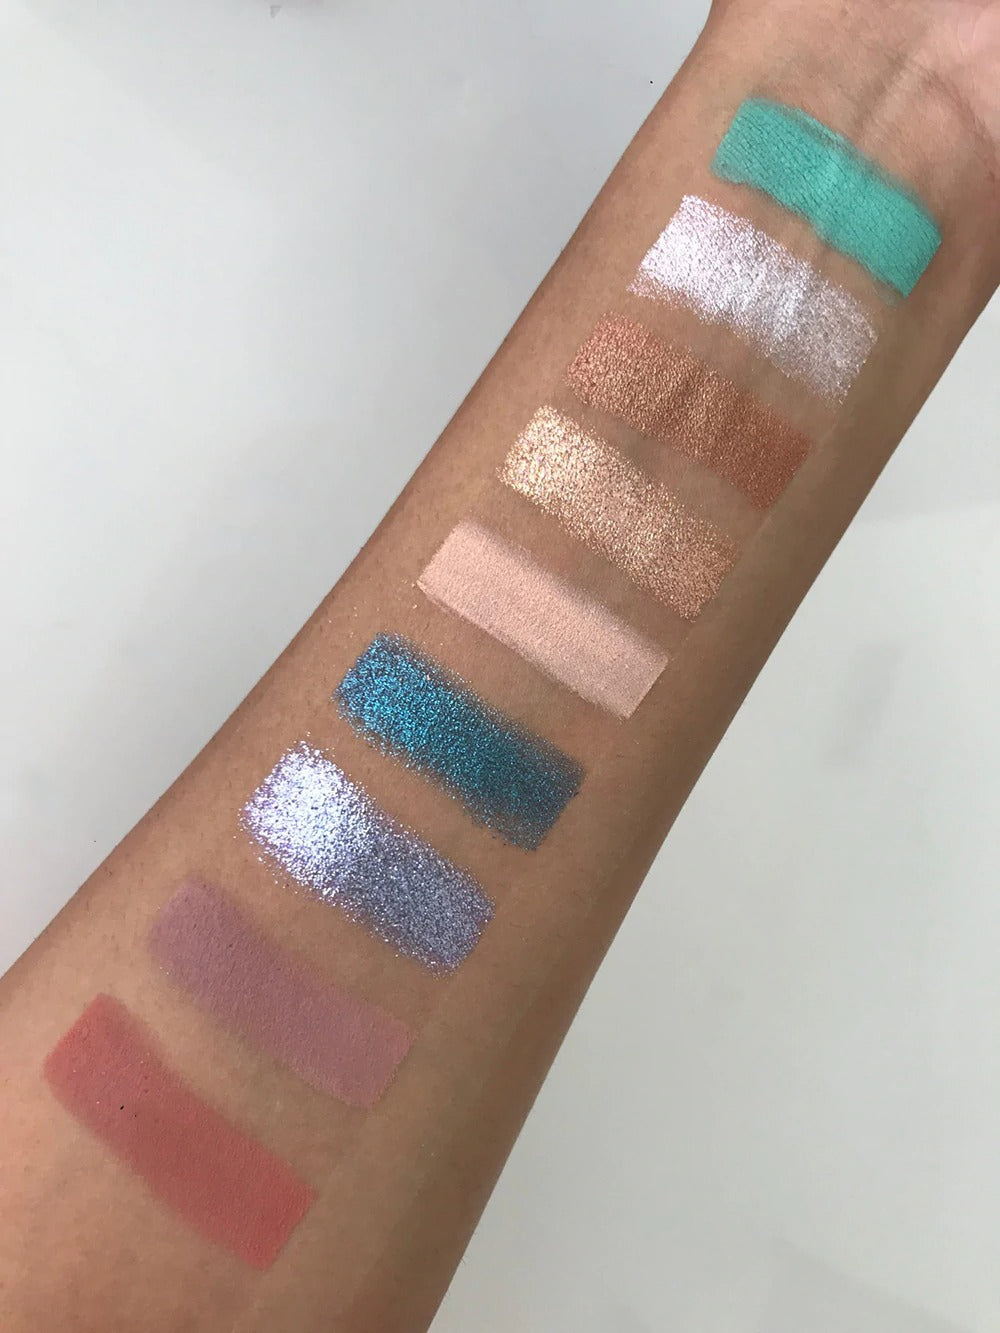 18 Color Eyeshadow Palette - Sissy Panty Shop